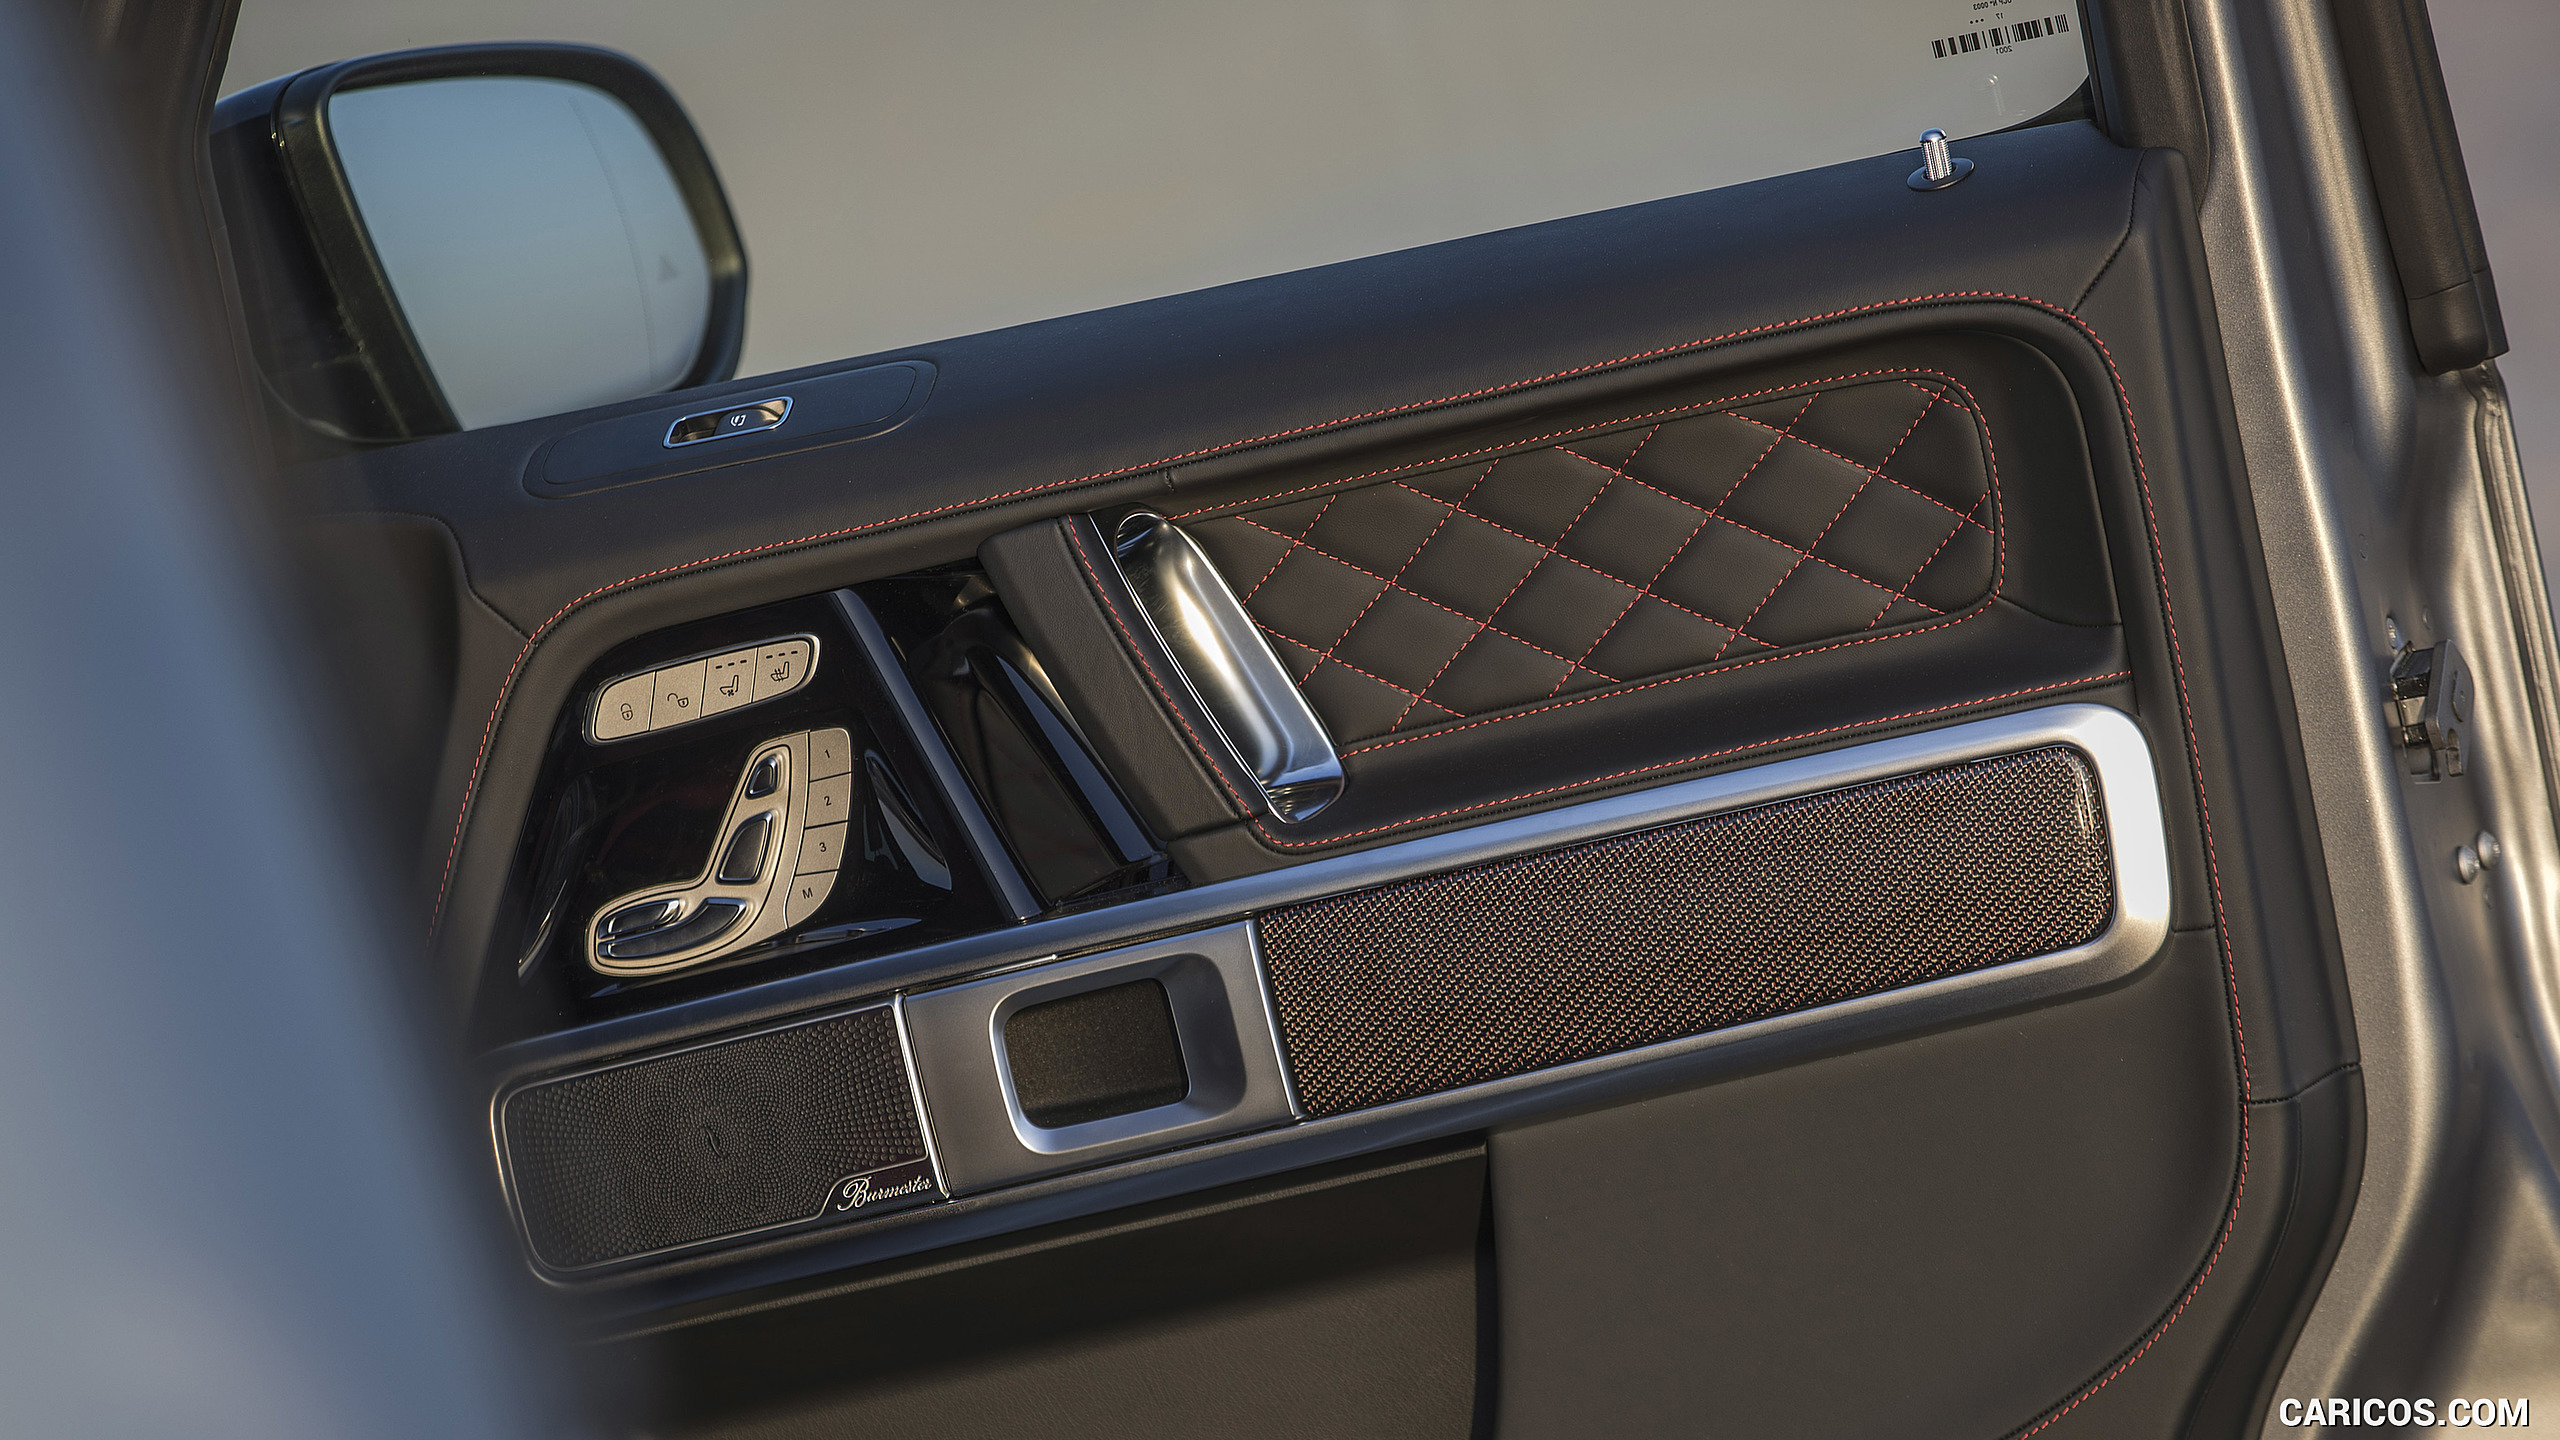 2019 Mercedes-AMG G63 - Interior, Detail, #190 of 452